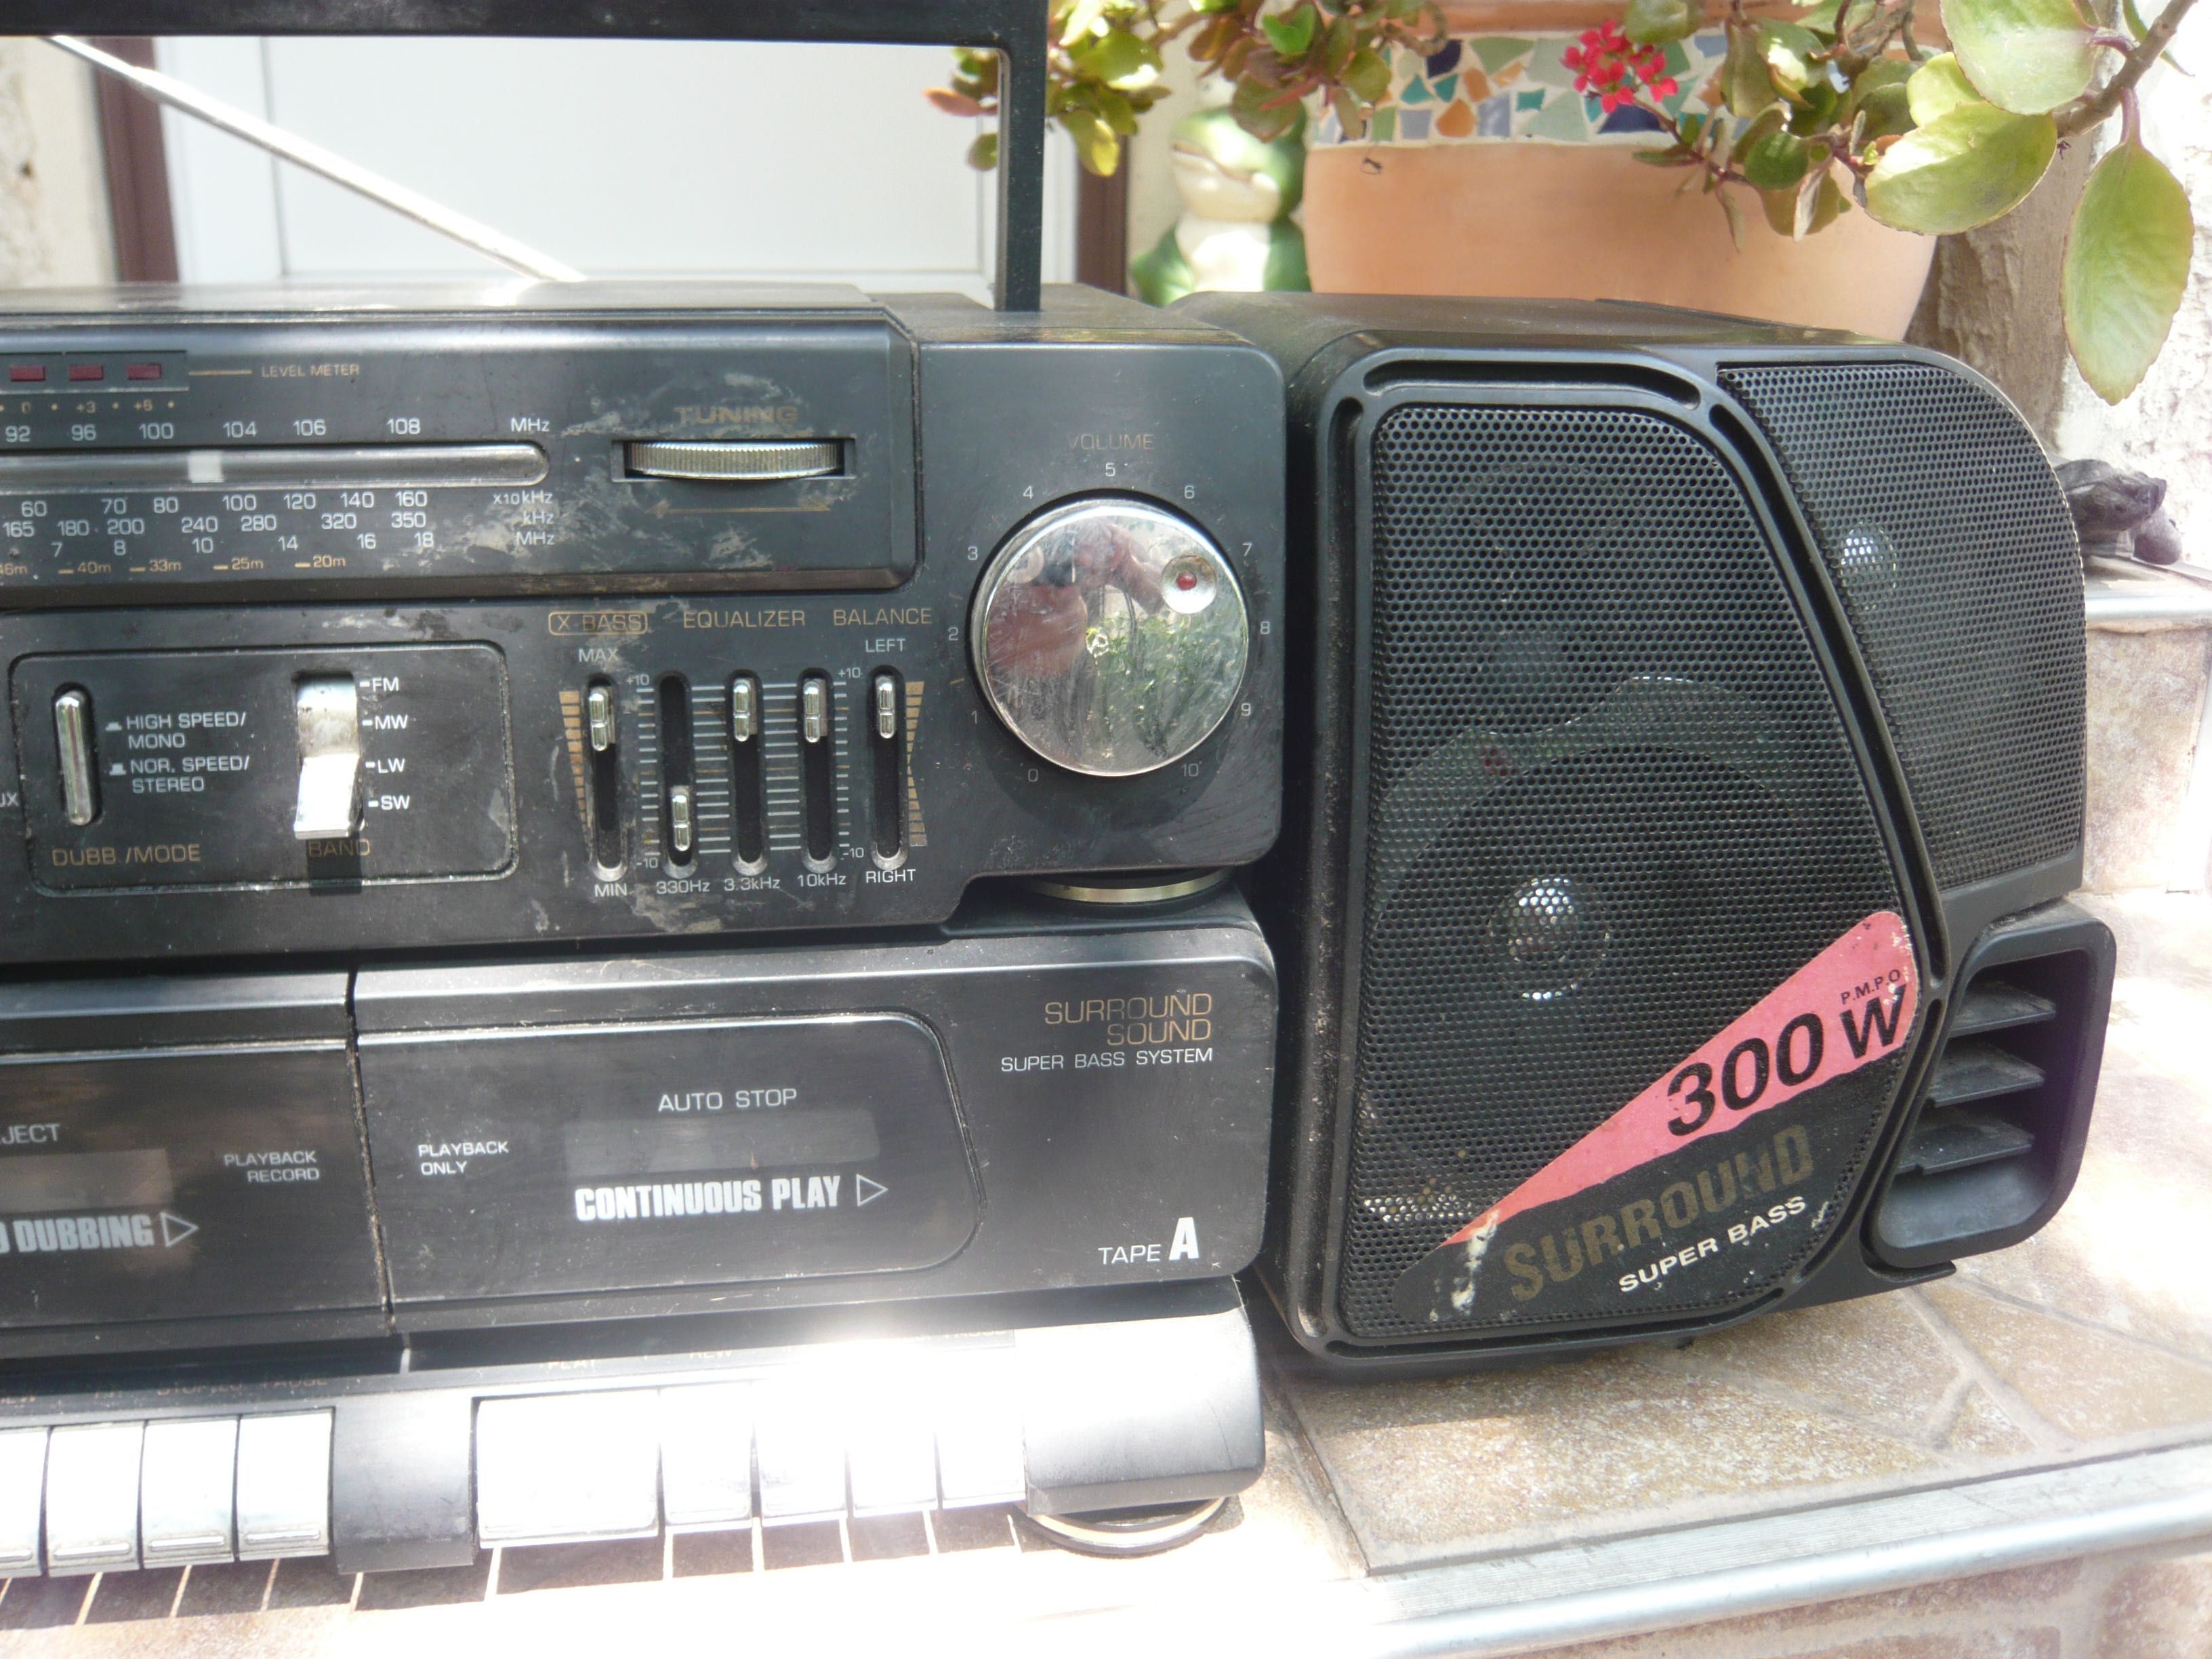 Radio dublu casetofon stereo, vintage Mekosonic MC 1000 DL